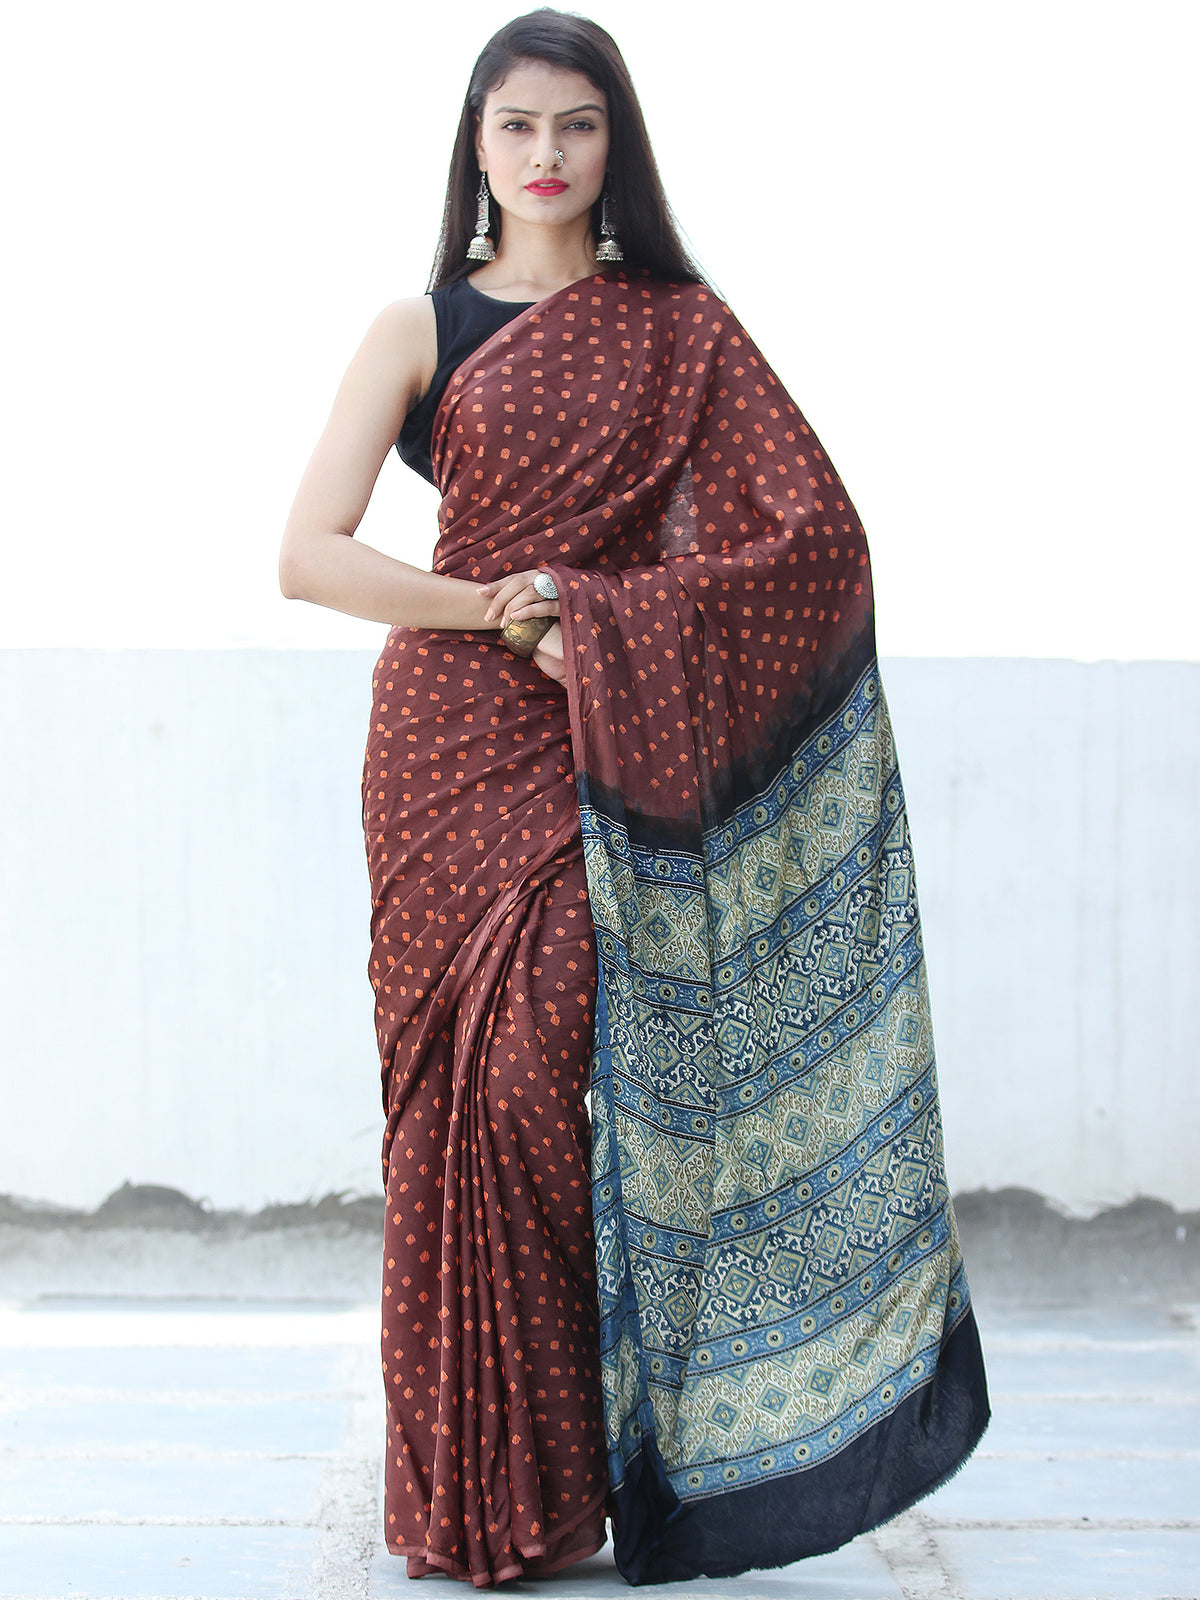 Brown Rust Black Green Bandhej Modal Silk Saree With Ajrakh Printed Pallu & Blouse - S031703877